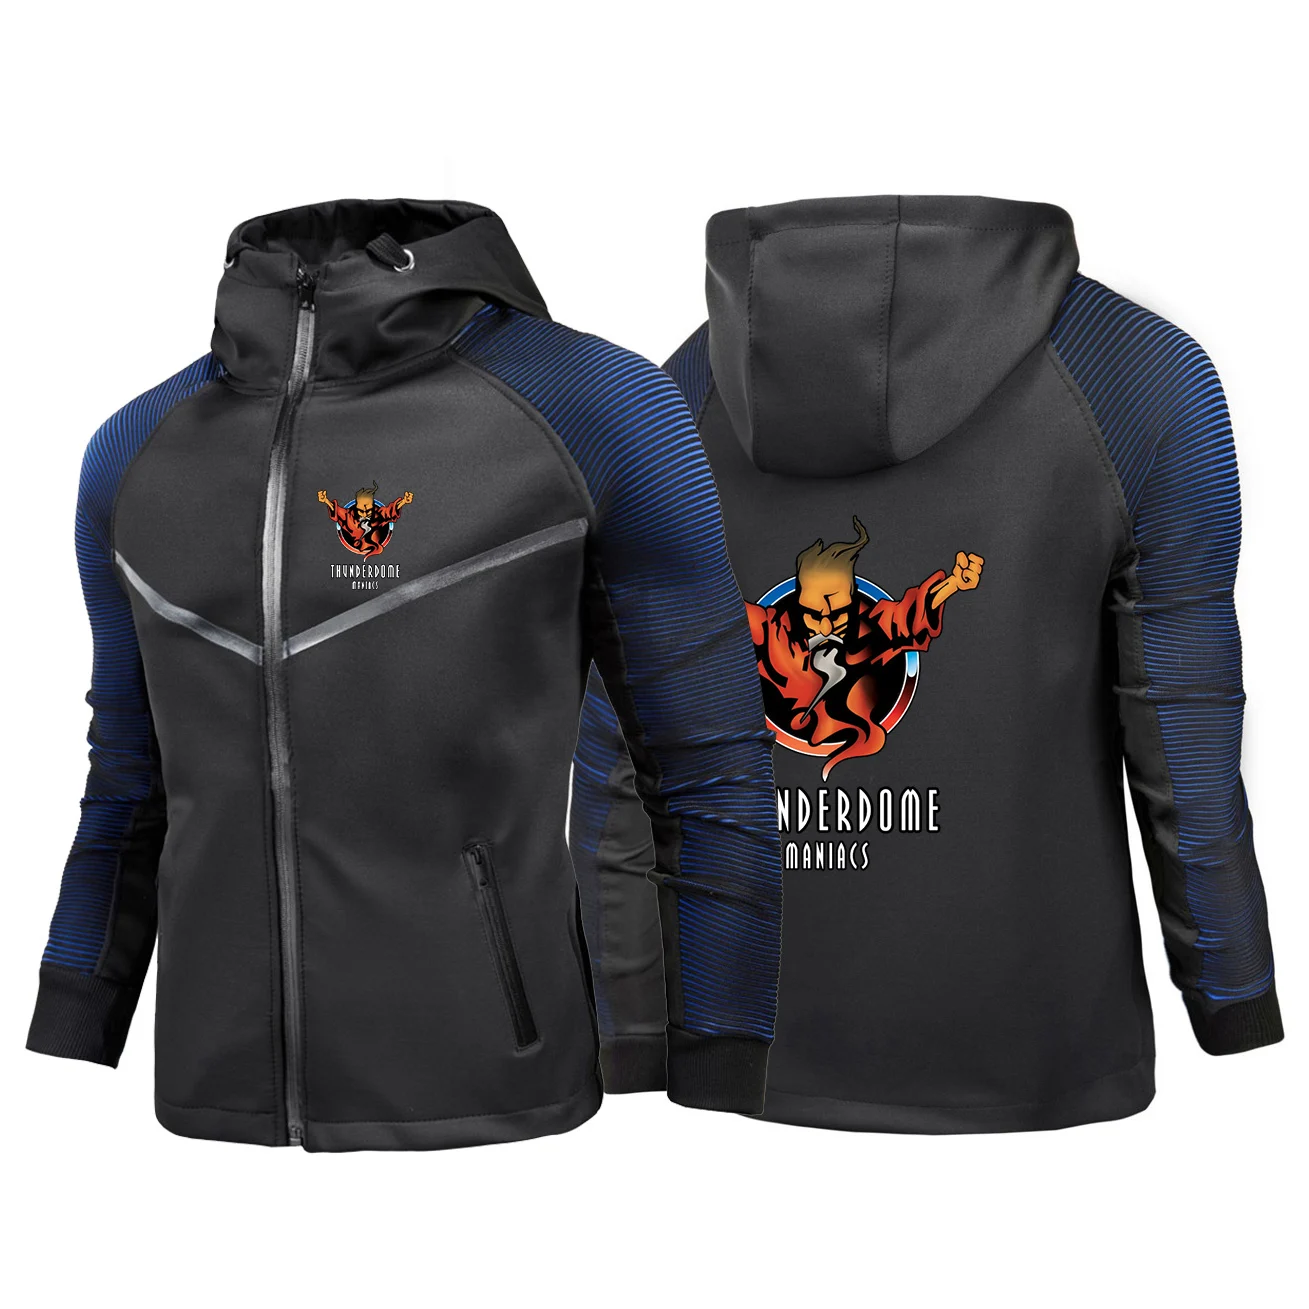 

2022 Men's Spring Autumn Thunderdome Printing Spliced Zipper Jacket Hoodies Slim Sexy Leisure Racing Suits Sportswear Coat